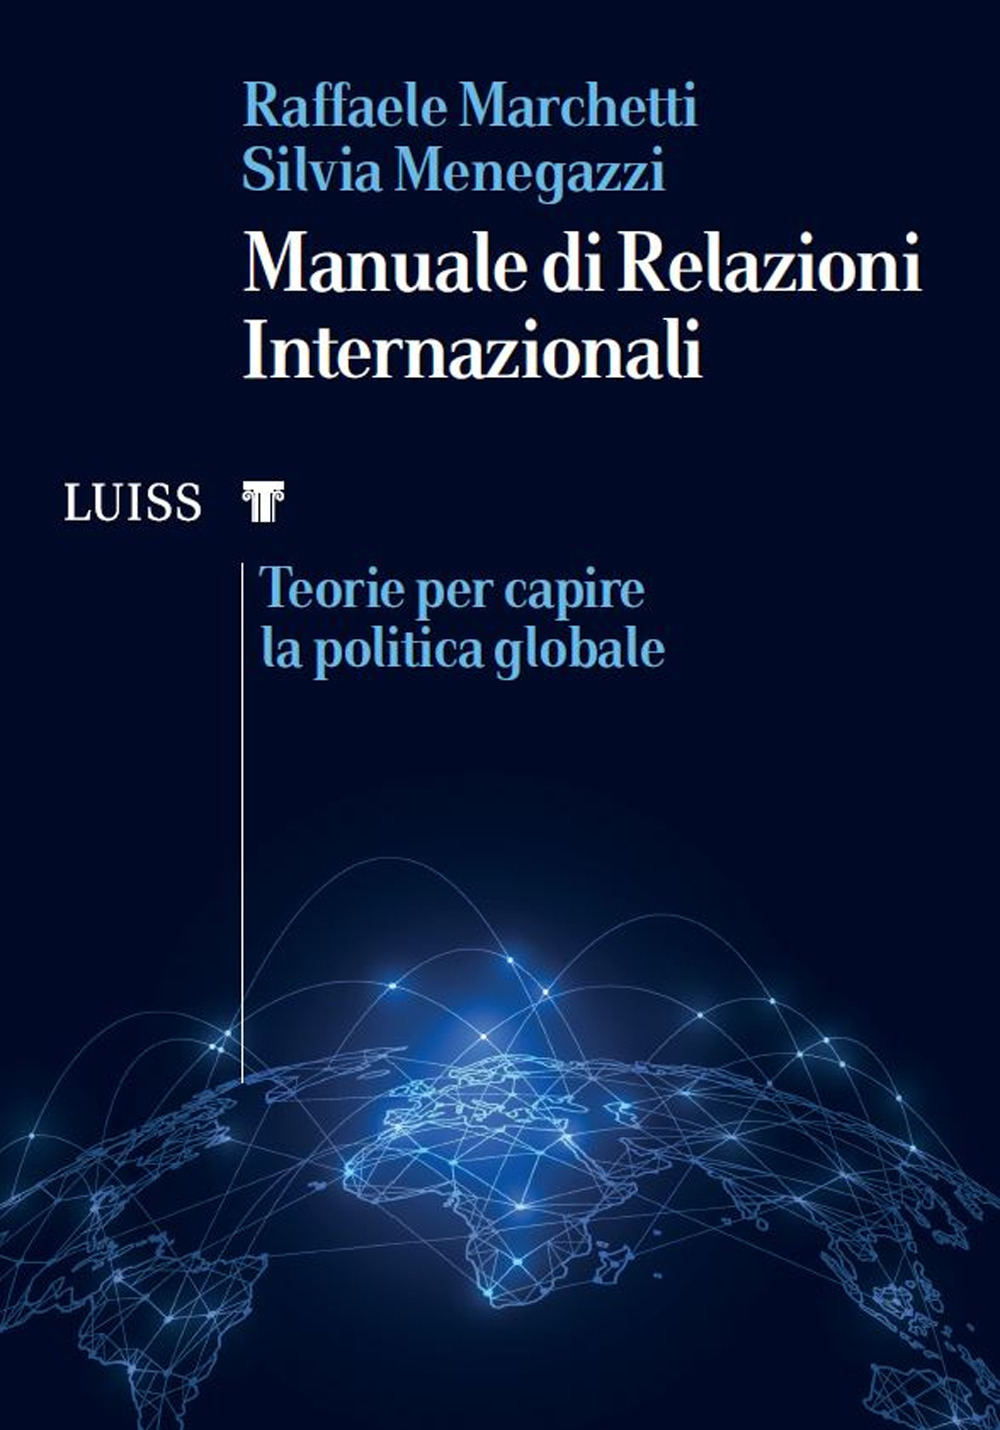 Manuale di relazioni internazionali. Teorie per capire la politica globale